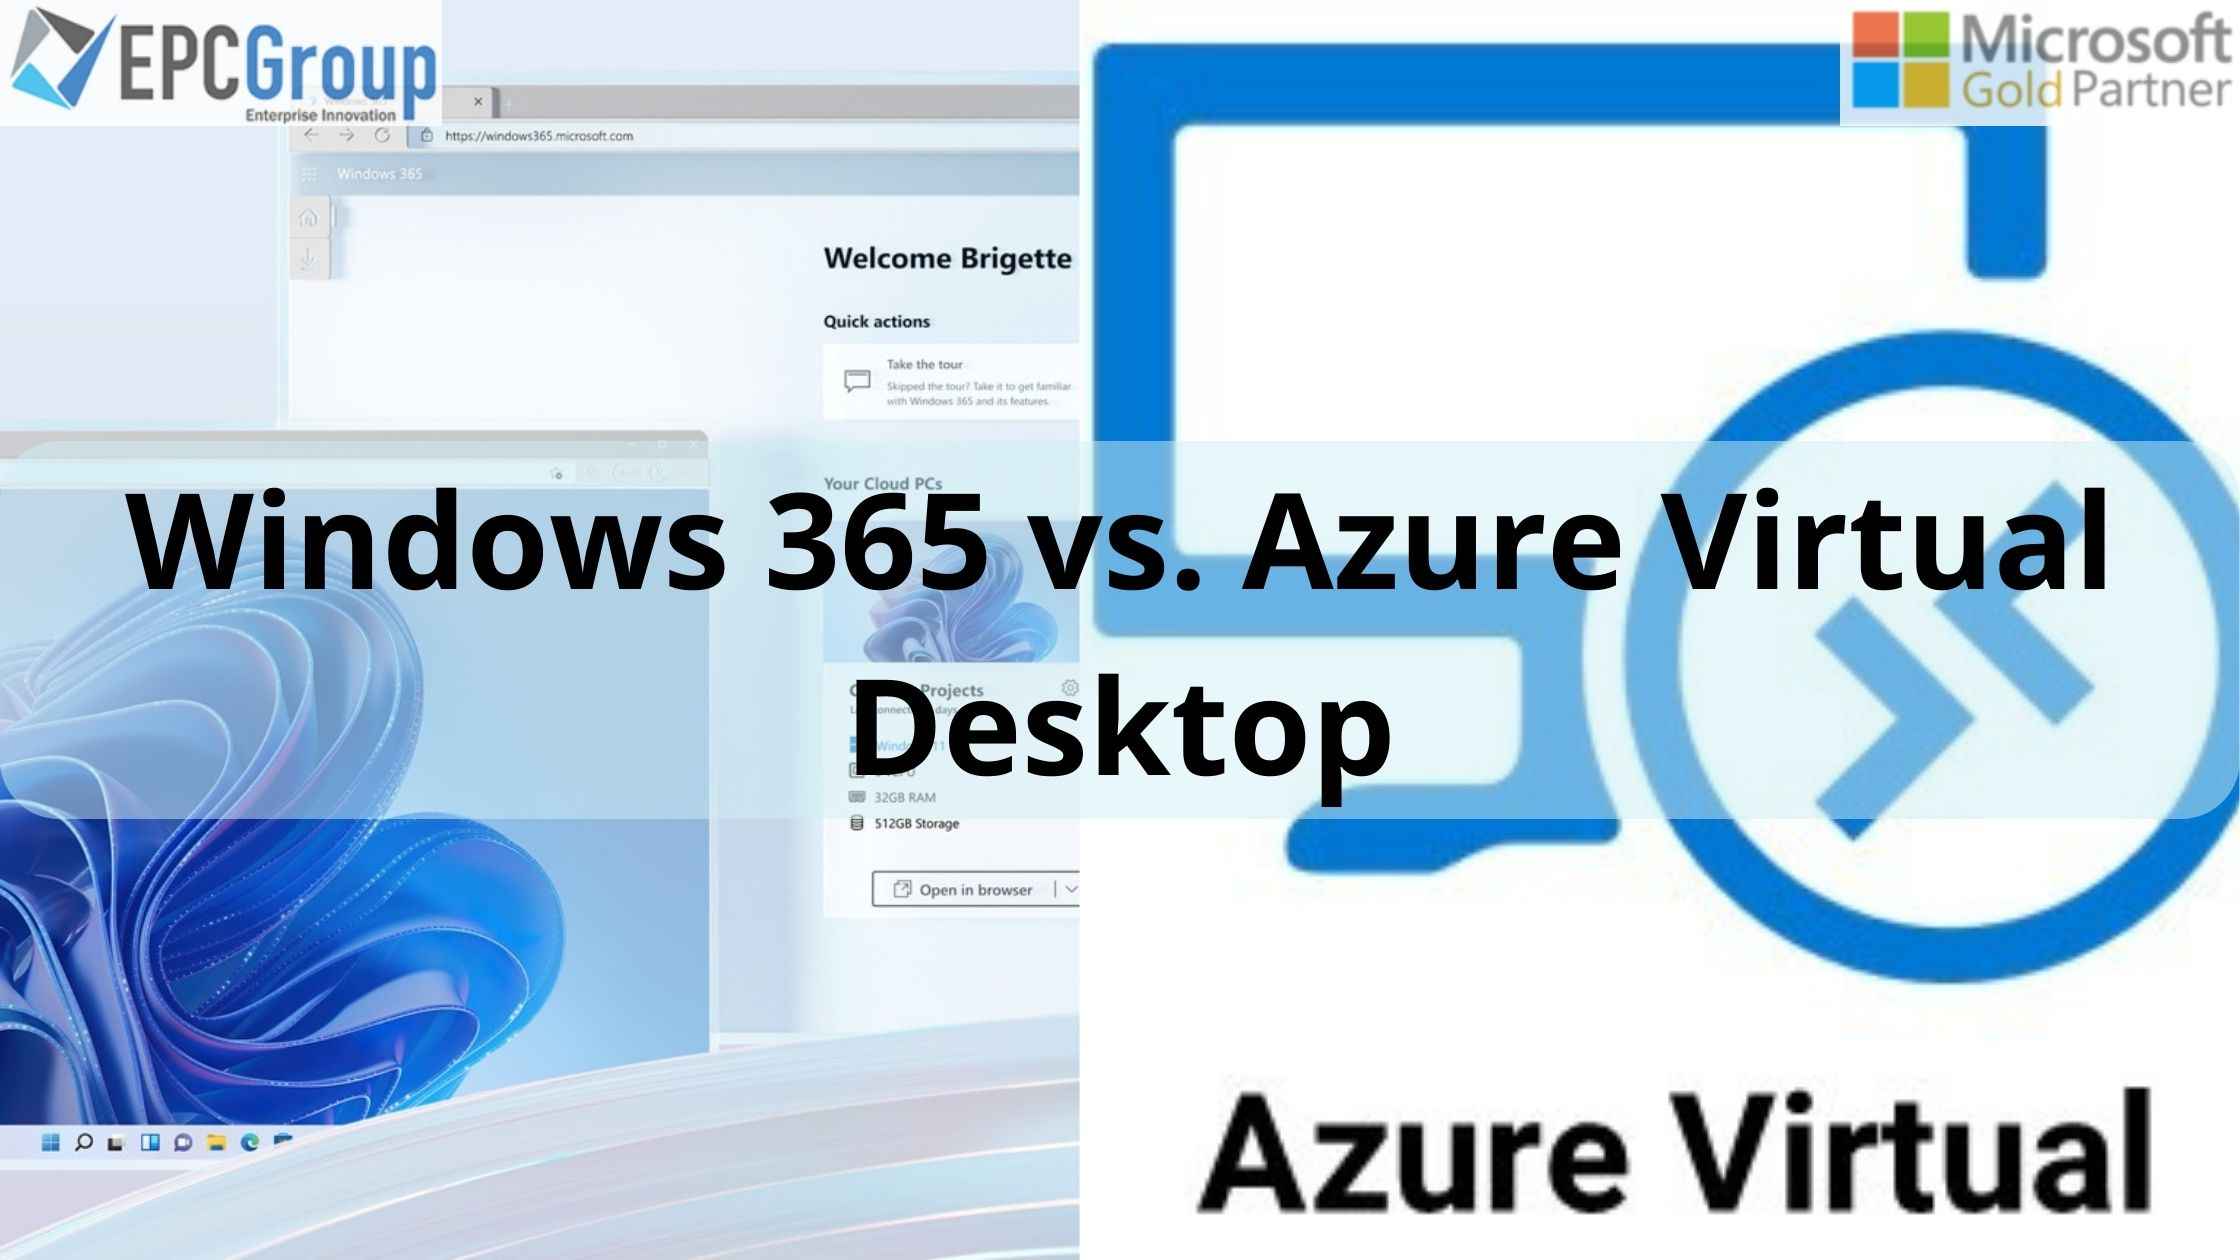 Windows 365 vs. Azure Virtual Desktop: Which Is Better for Programmers?